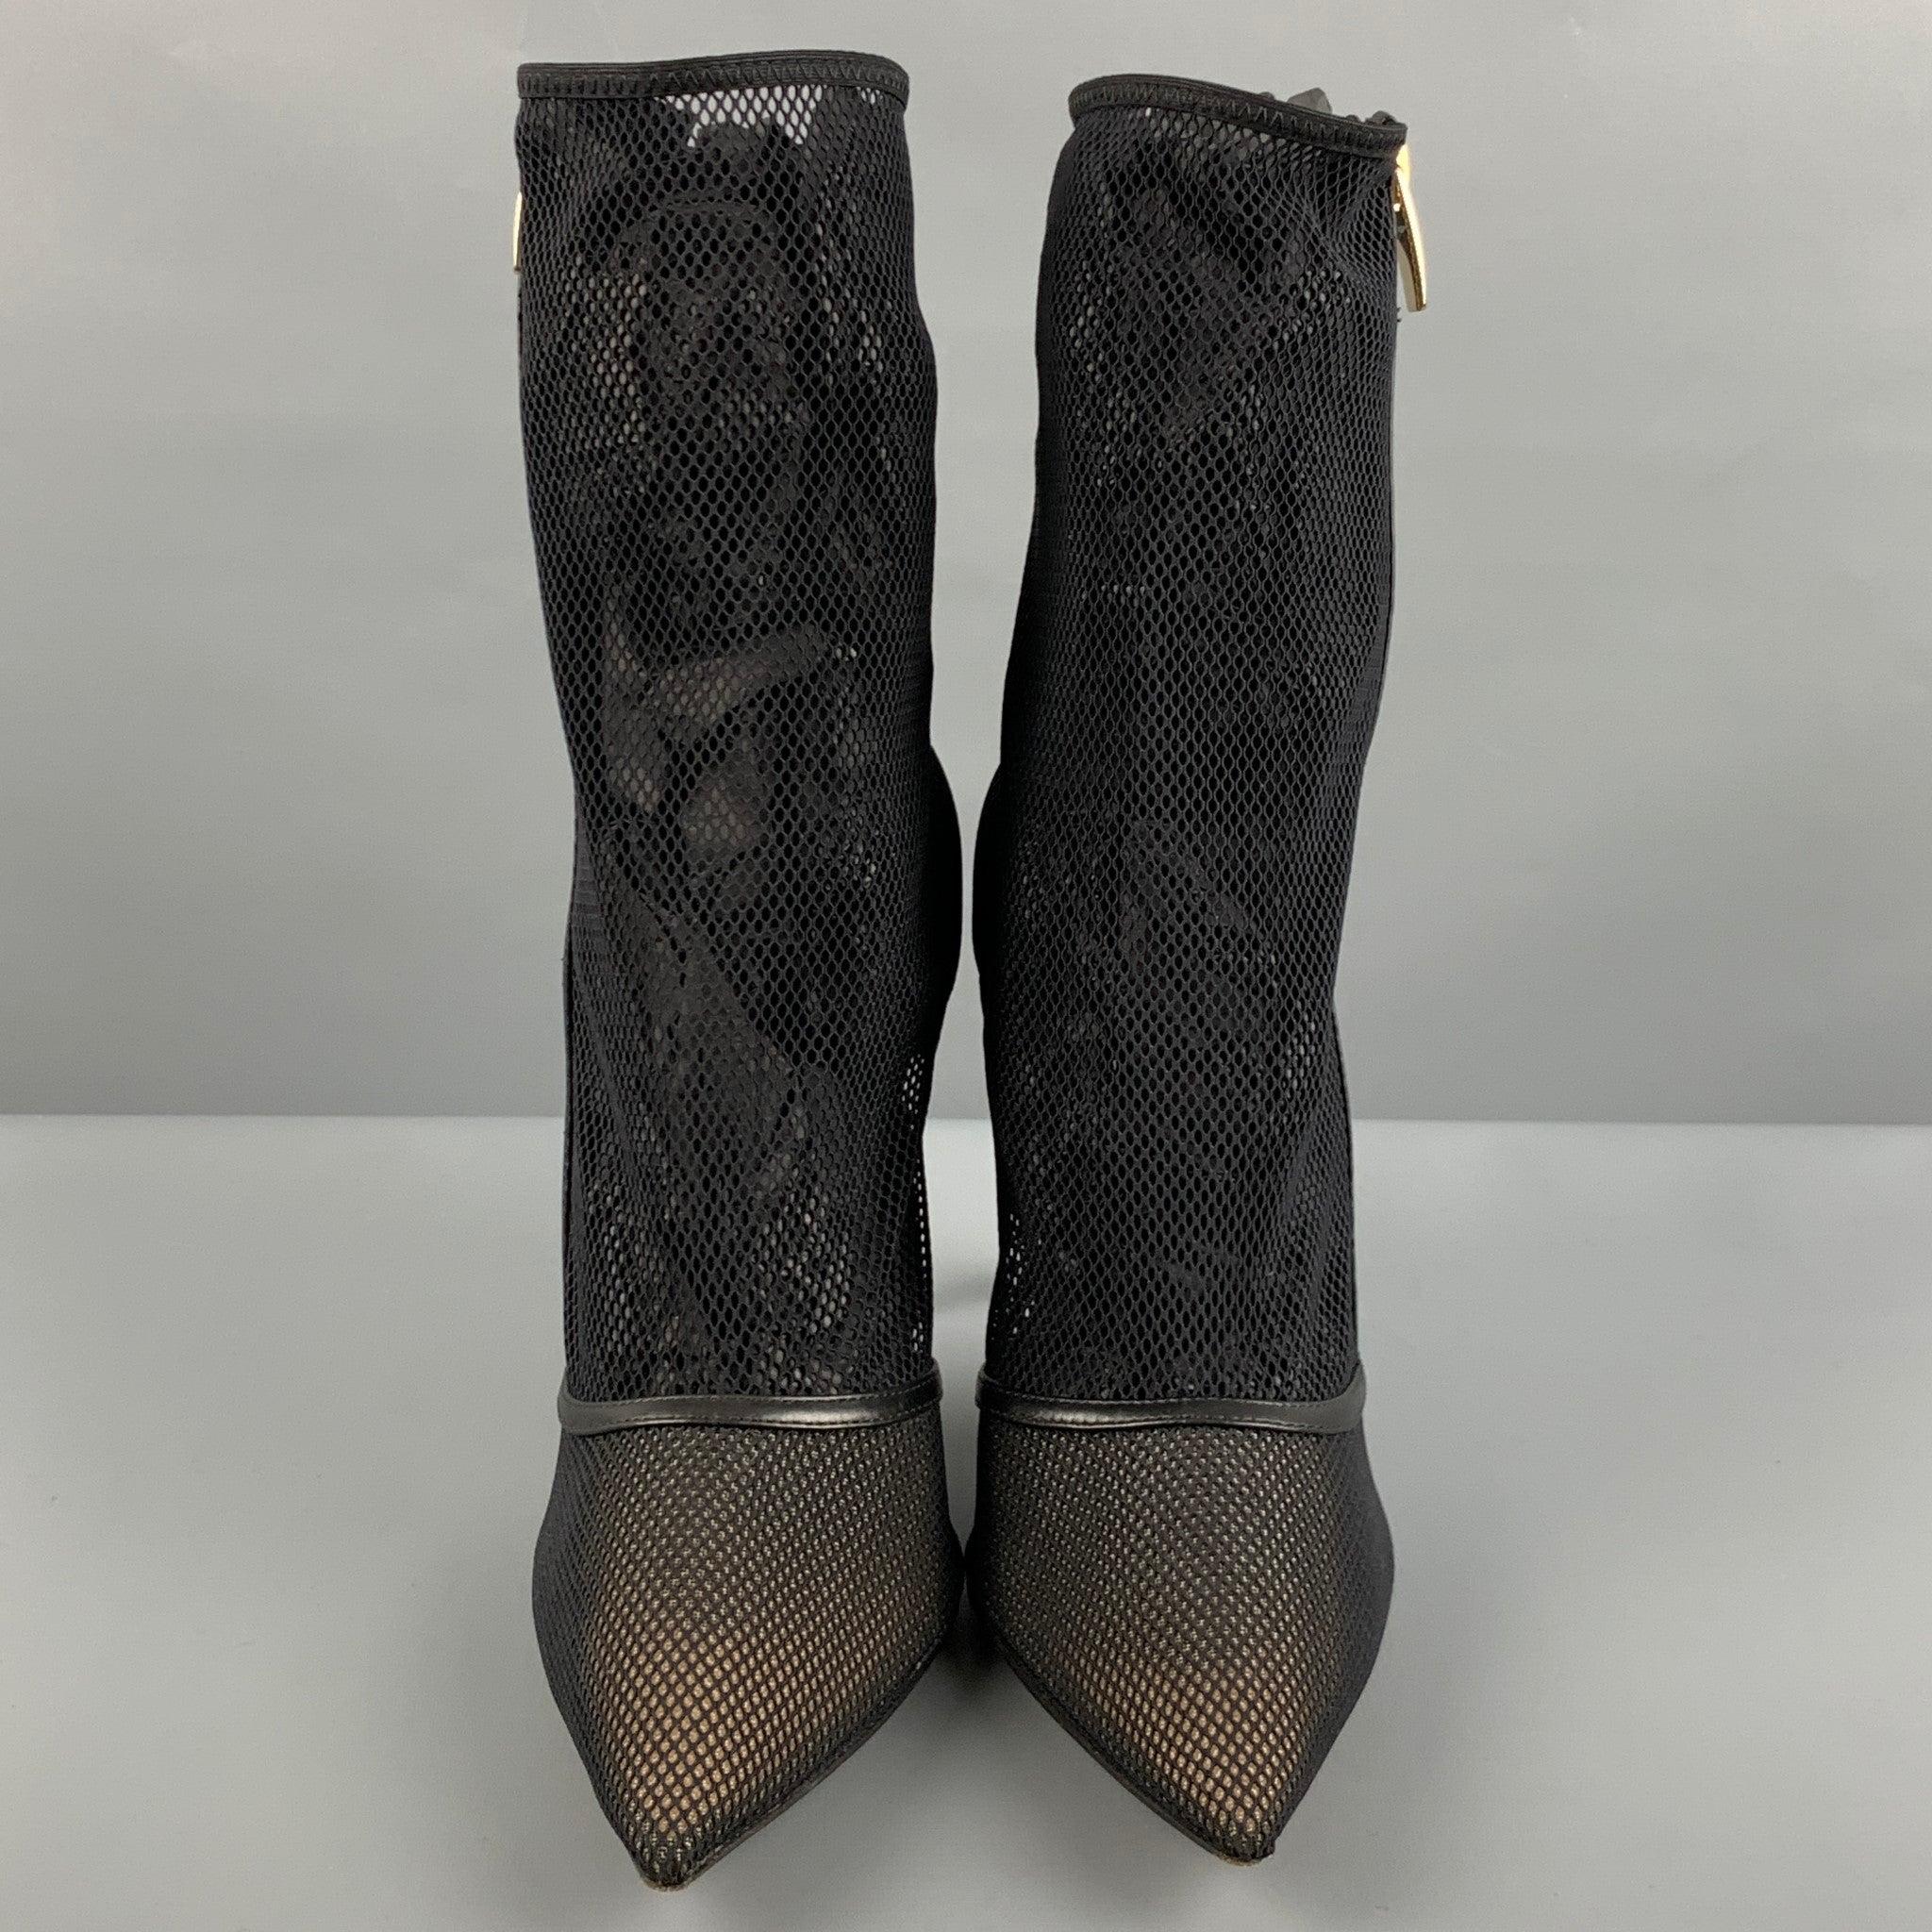 Women's GIANVITO ROSSI Size 9.5 Black Mesh Side Zipper Boots For Sale